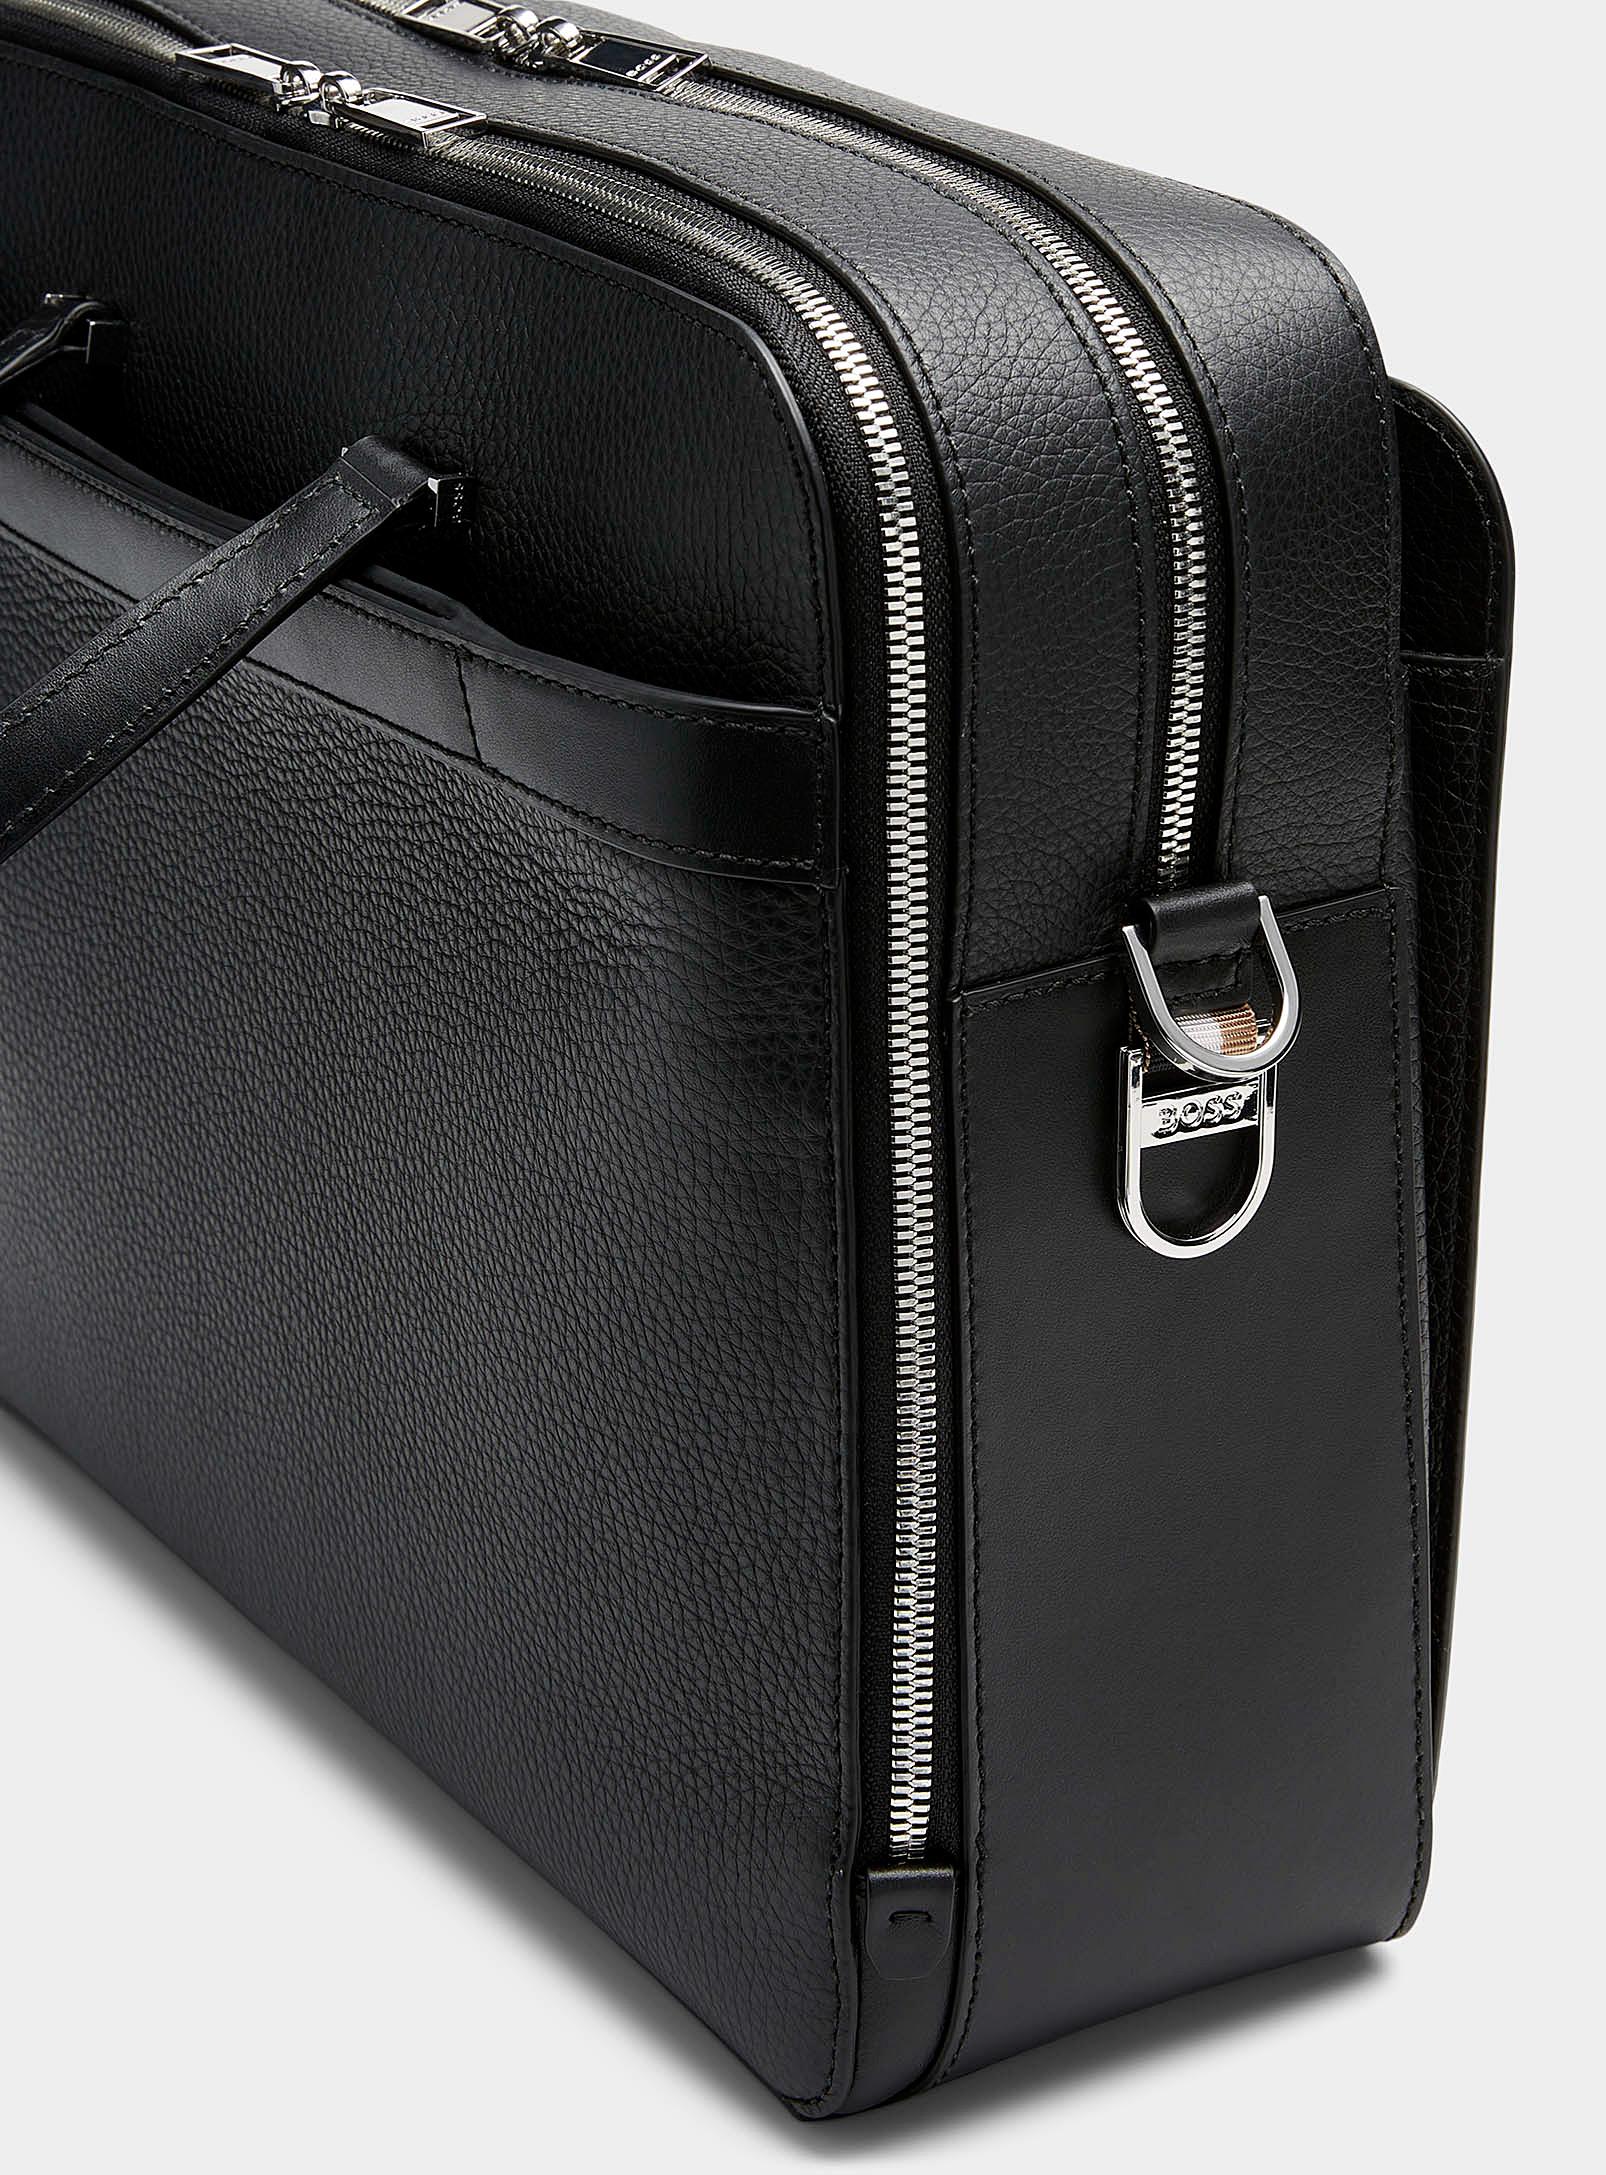 kapital Forræderi Derive BOSS by HUGO BOSS Textured Leather Briefcase in Black for Men | Lyst